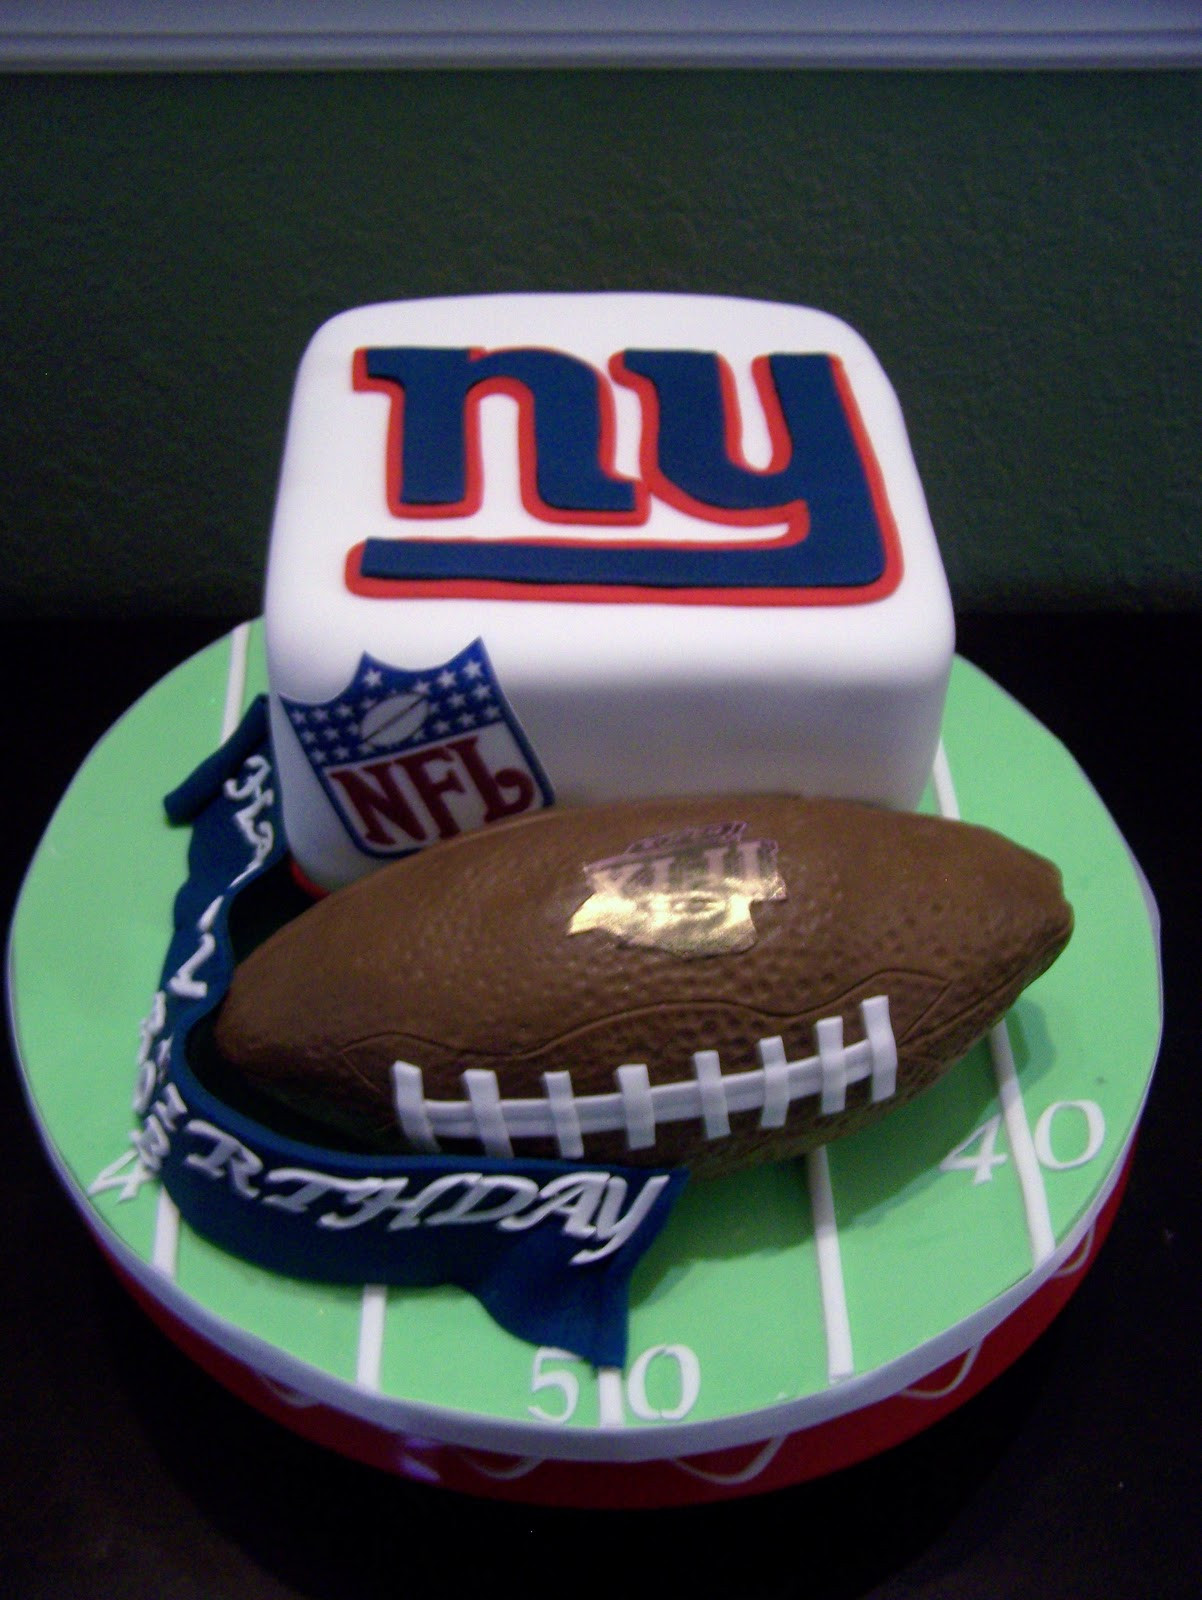 Ny Giants Birthday Cake
 Wendy Woo Cakes MINI Cakes or Cakes for 2